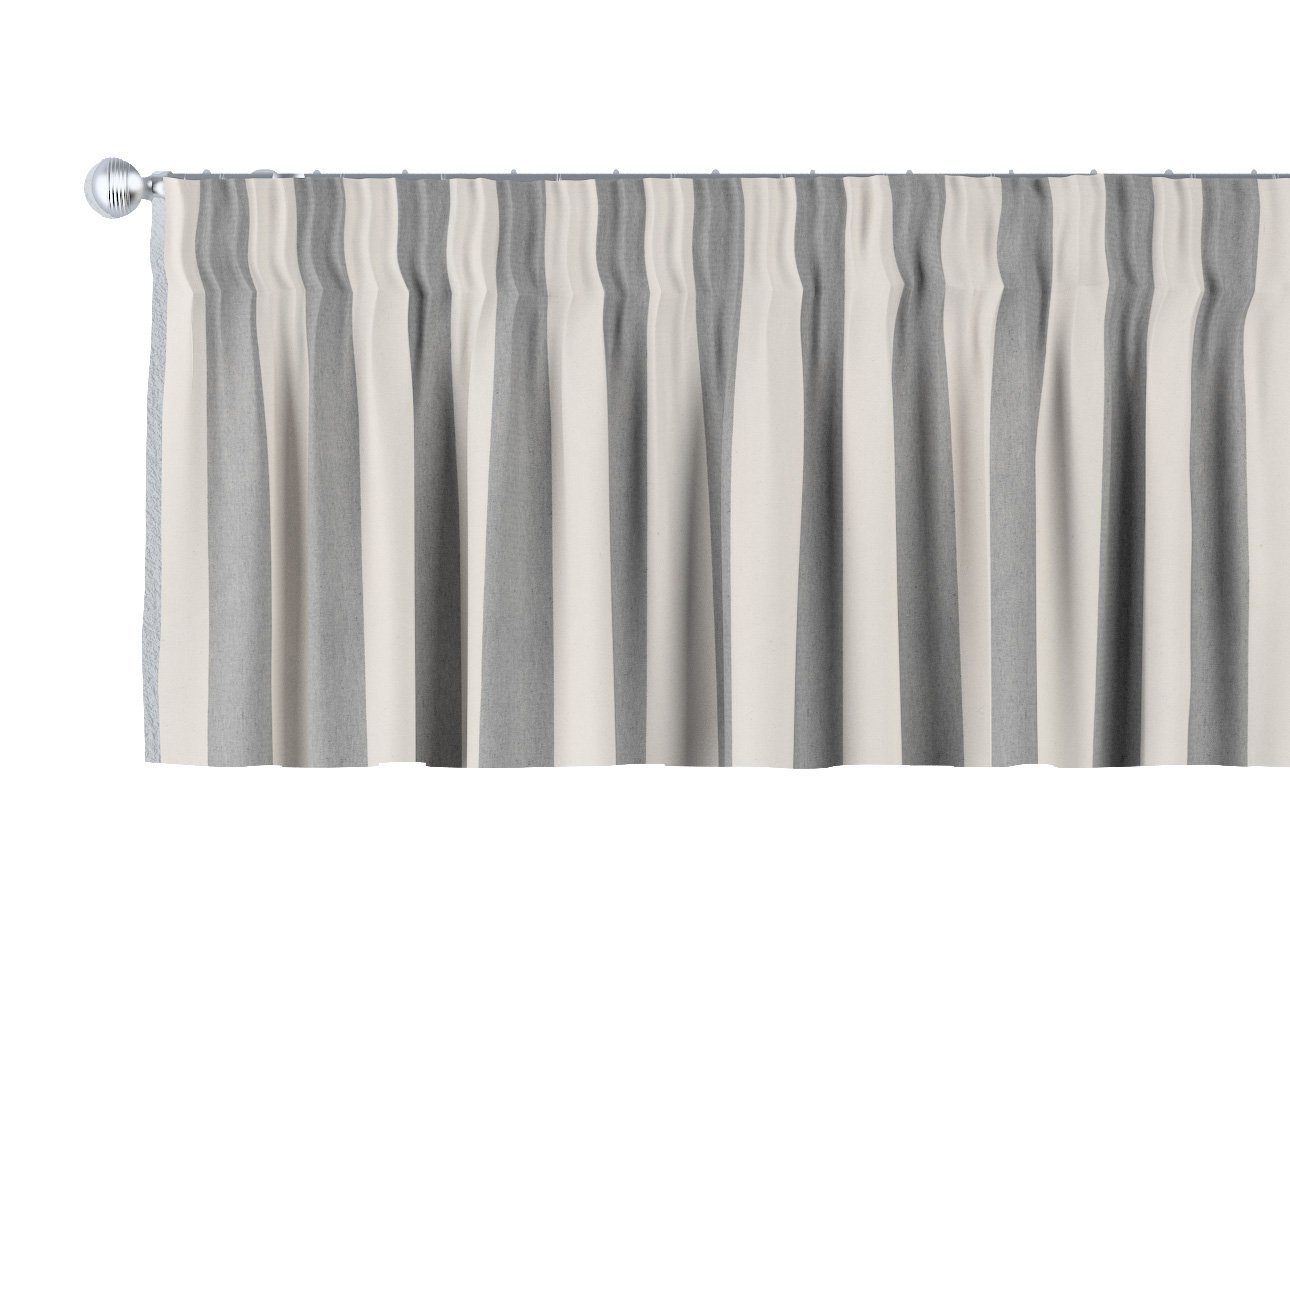 Vorhang mit Kräuselband 130 x 40 cm, Quadro, Dekoria weiß-grau | Fertiggardinen